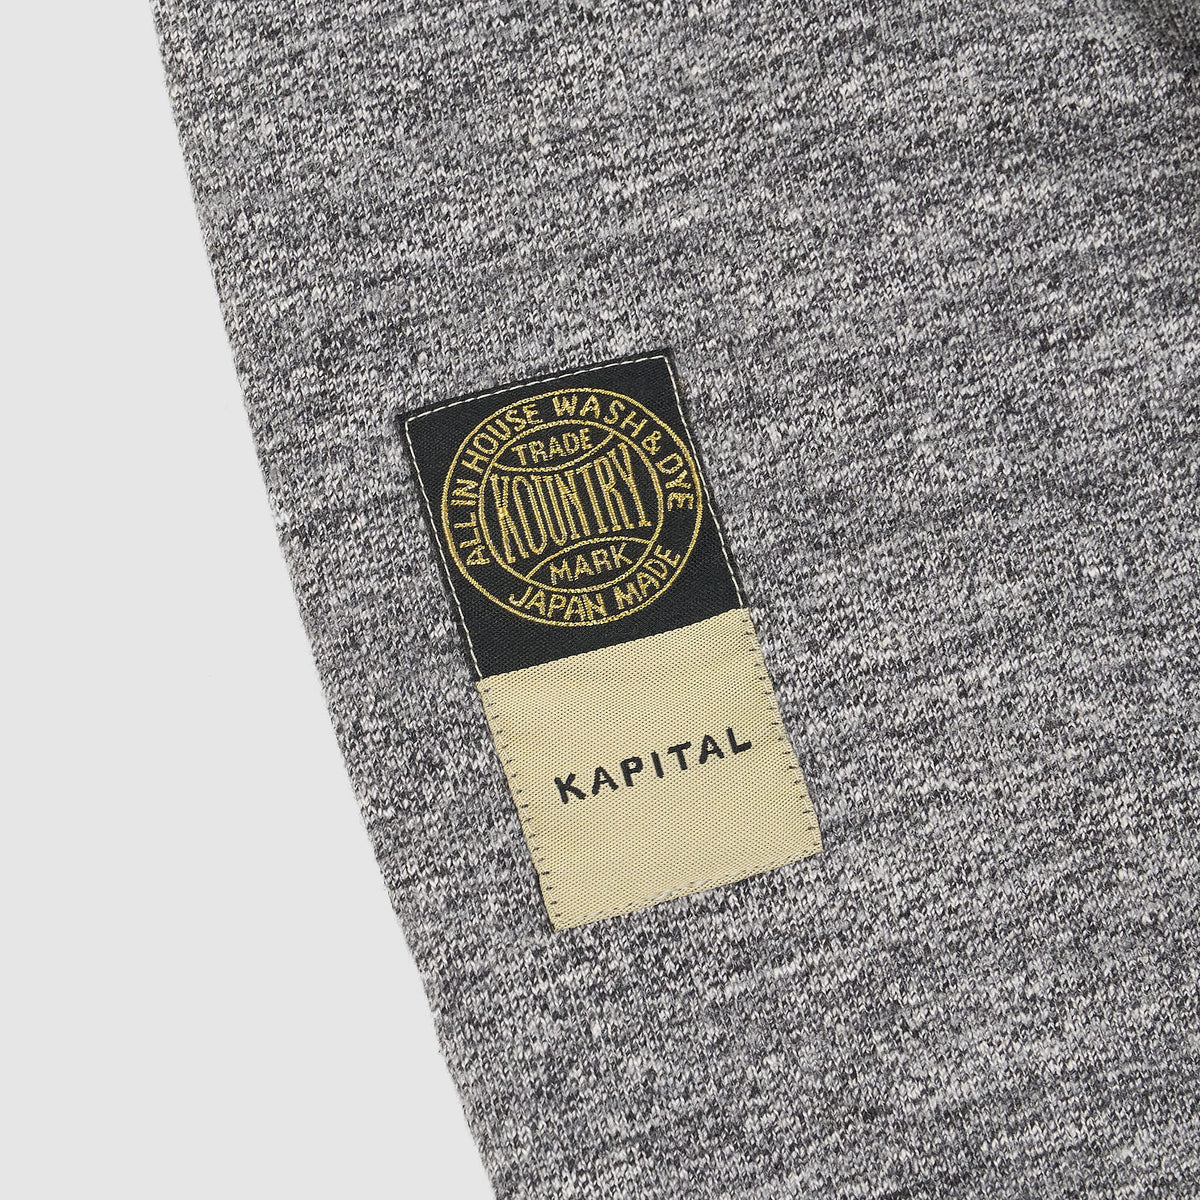 Kapital Kountry Jersey Knitted  Hard 47 Ball Sweatshirt